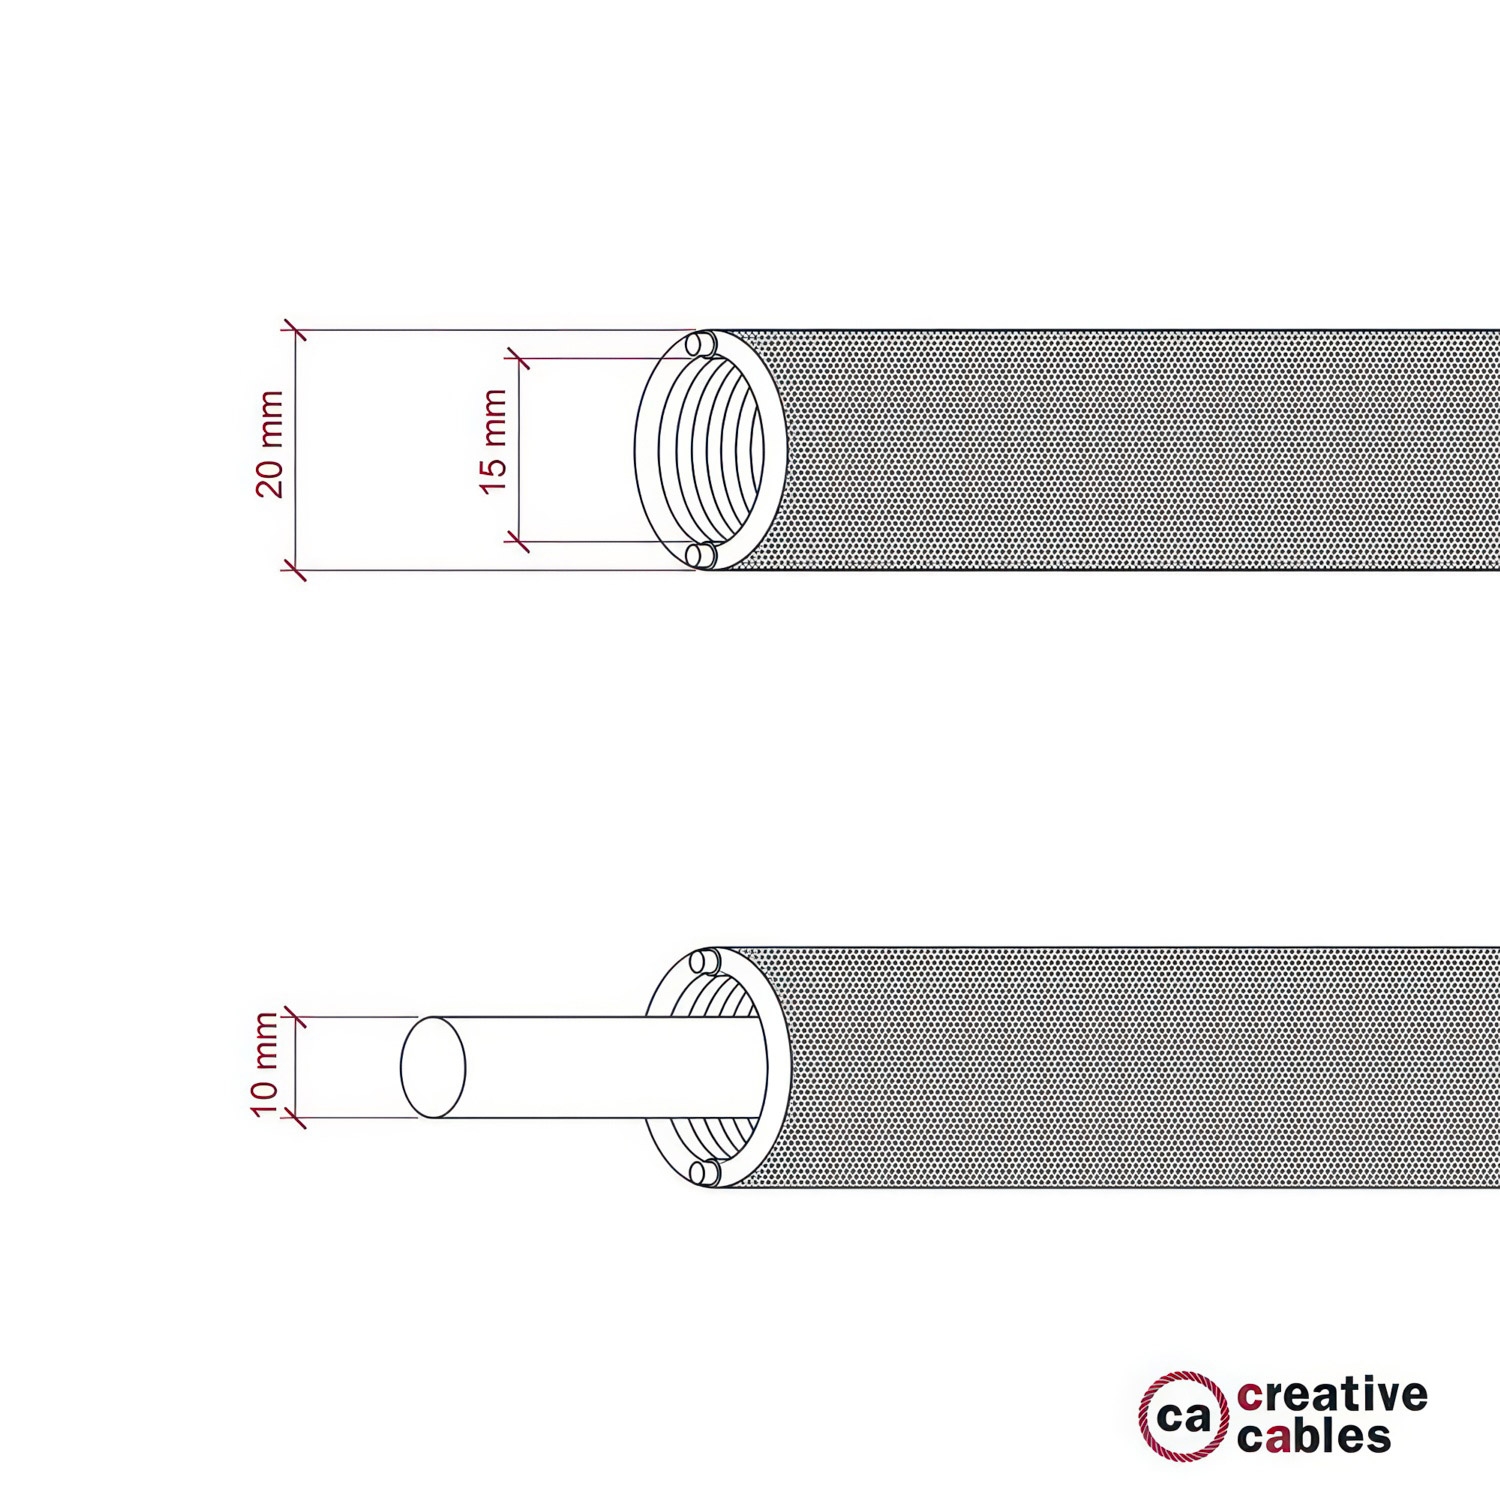 Creative-Tube flexible conduit, Rayon 3D effect fabric Star RT41 covering, diameter 20 mm